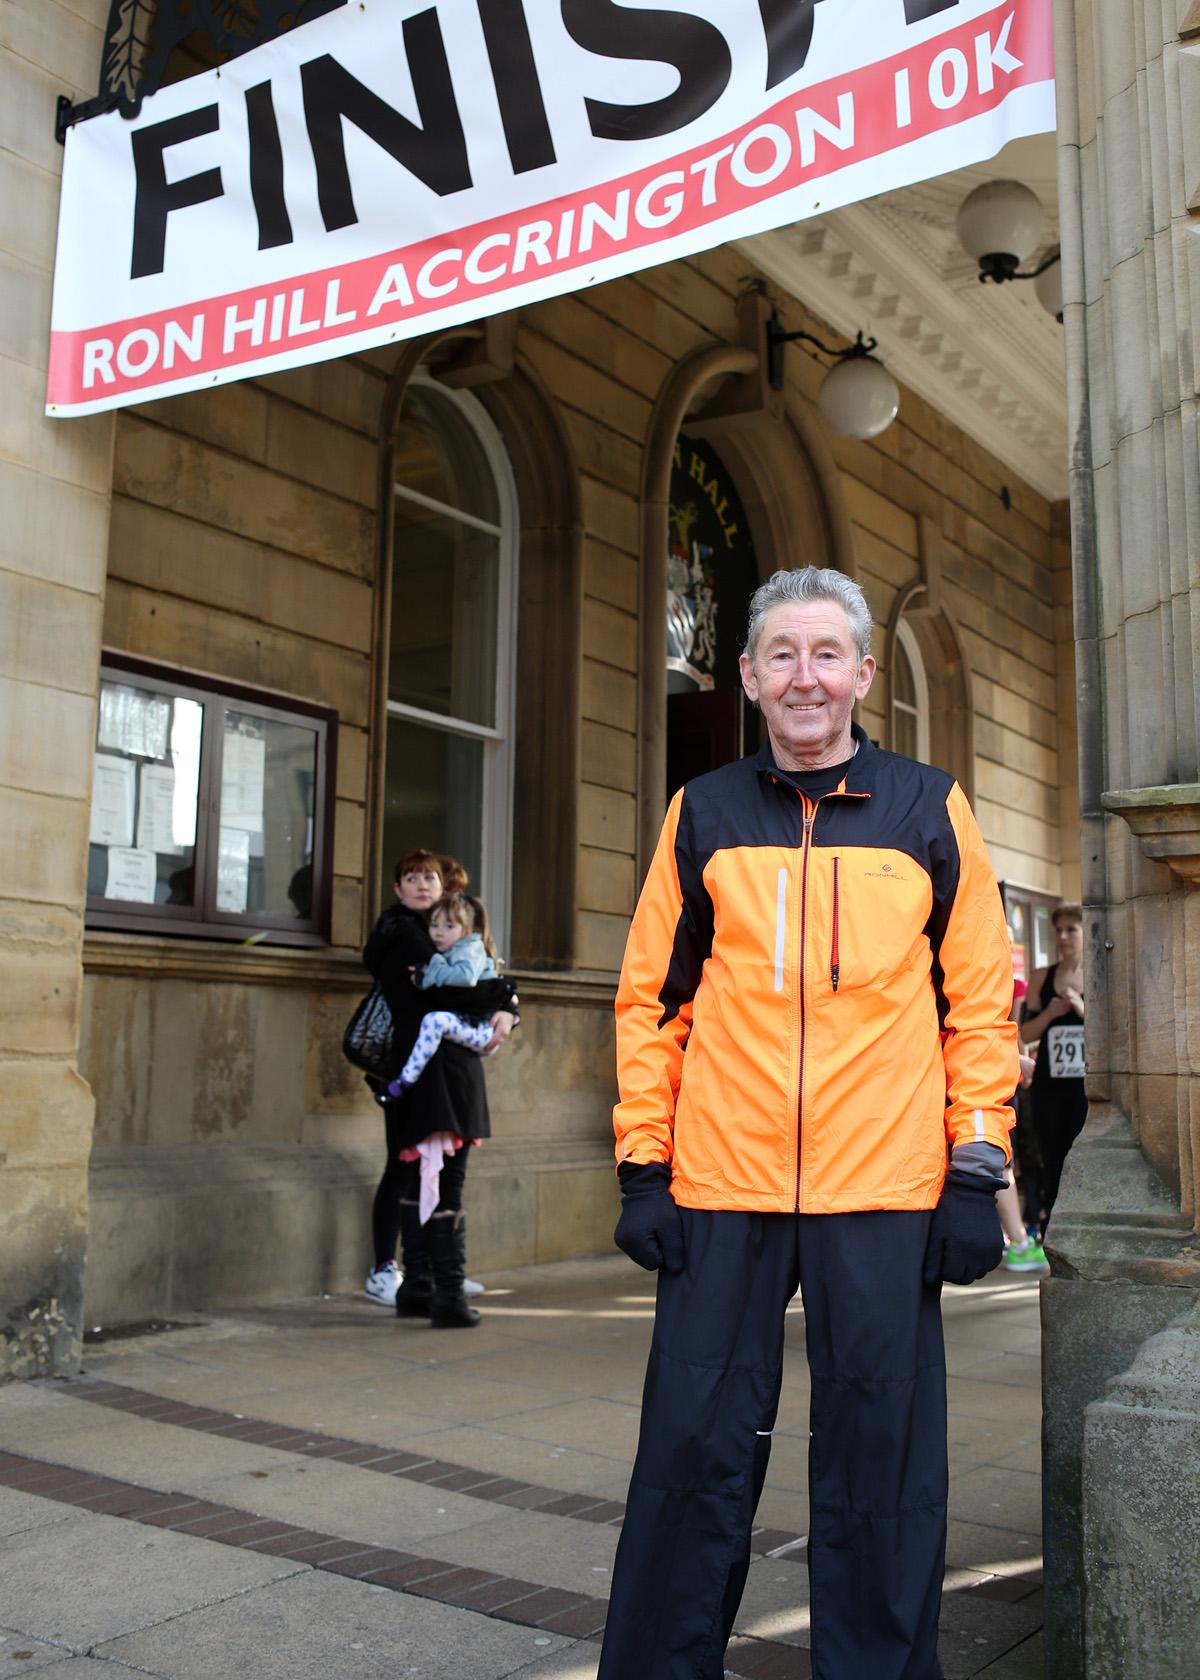 Ron Hill 10k, Accrington